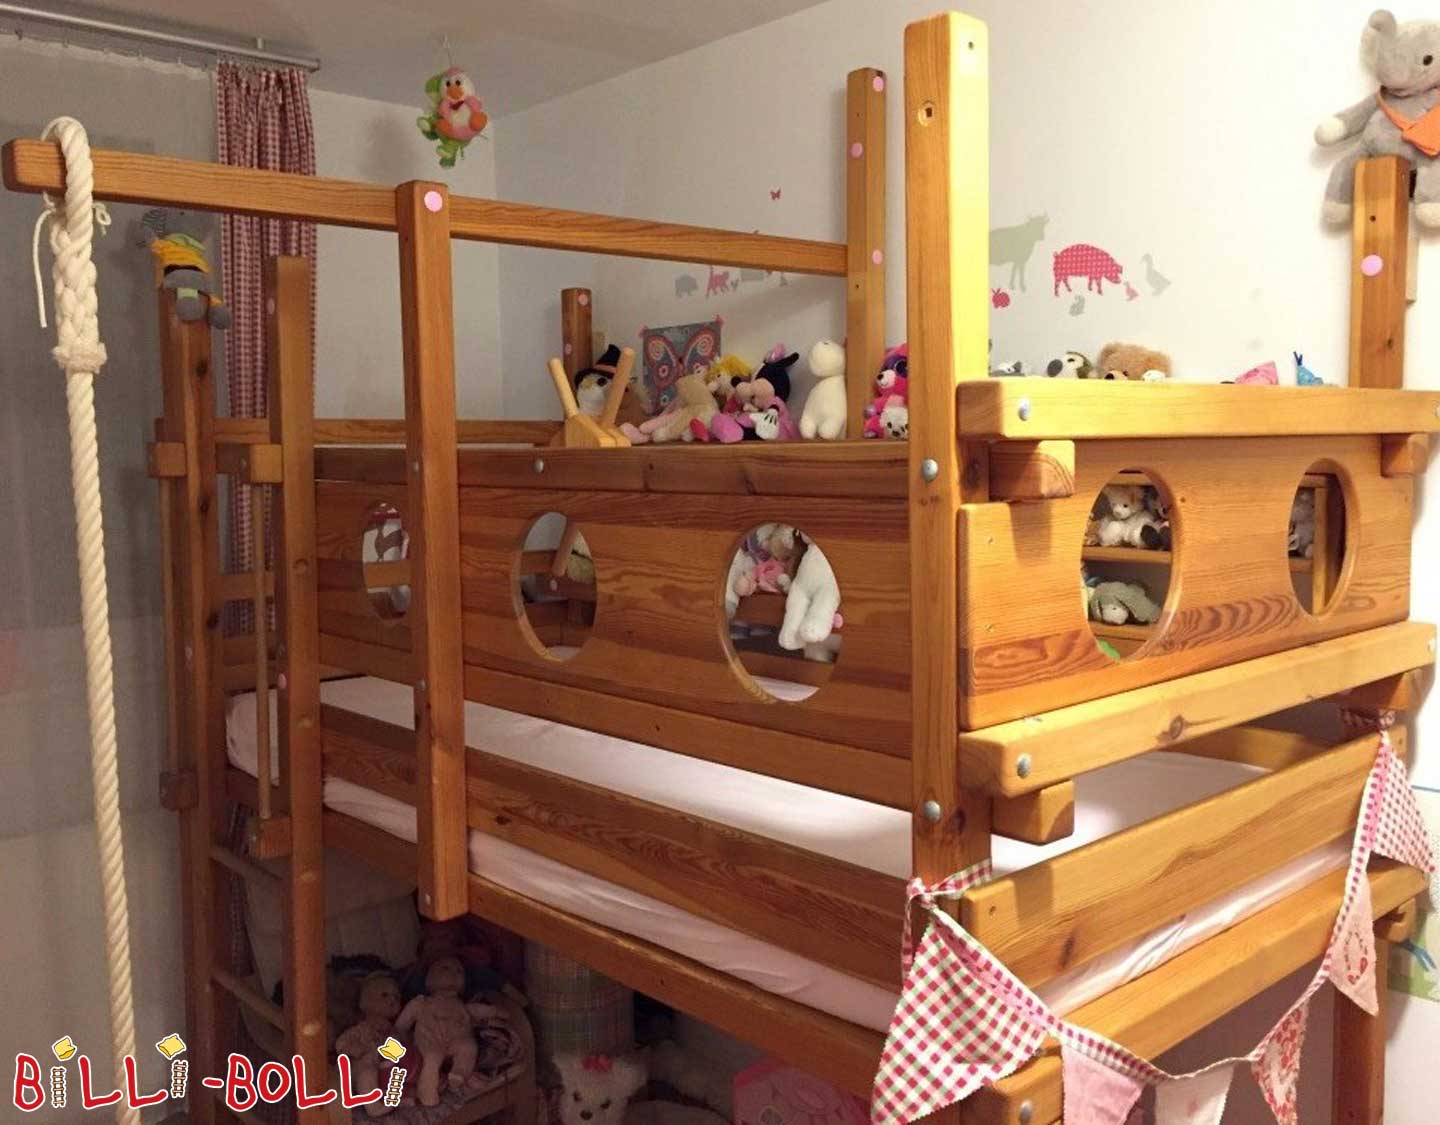 Njegovan krevet u potkrovlju koji raste s djetetom (Kategorija: Korišten krevet u potkrovlju)